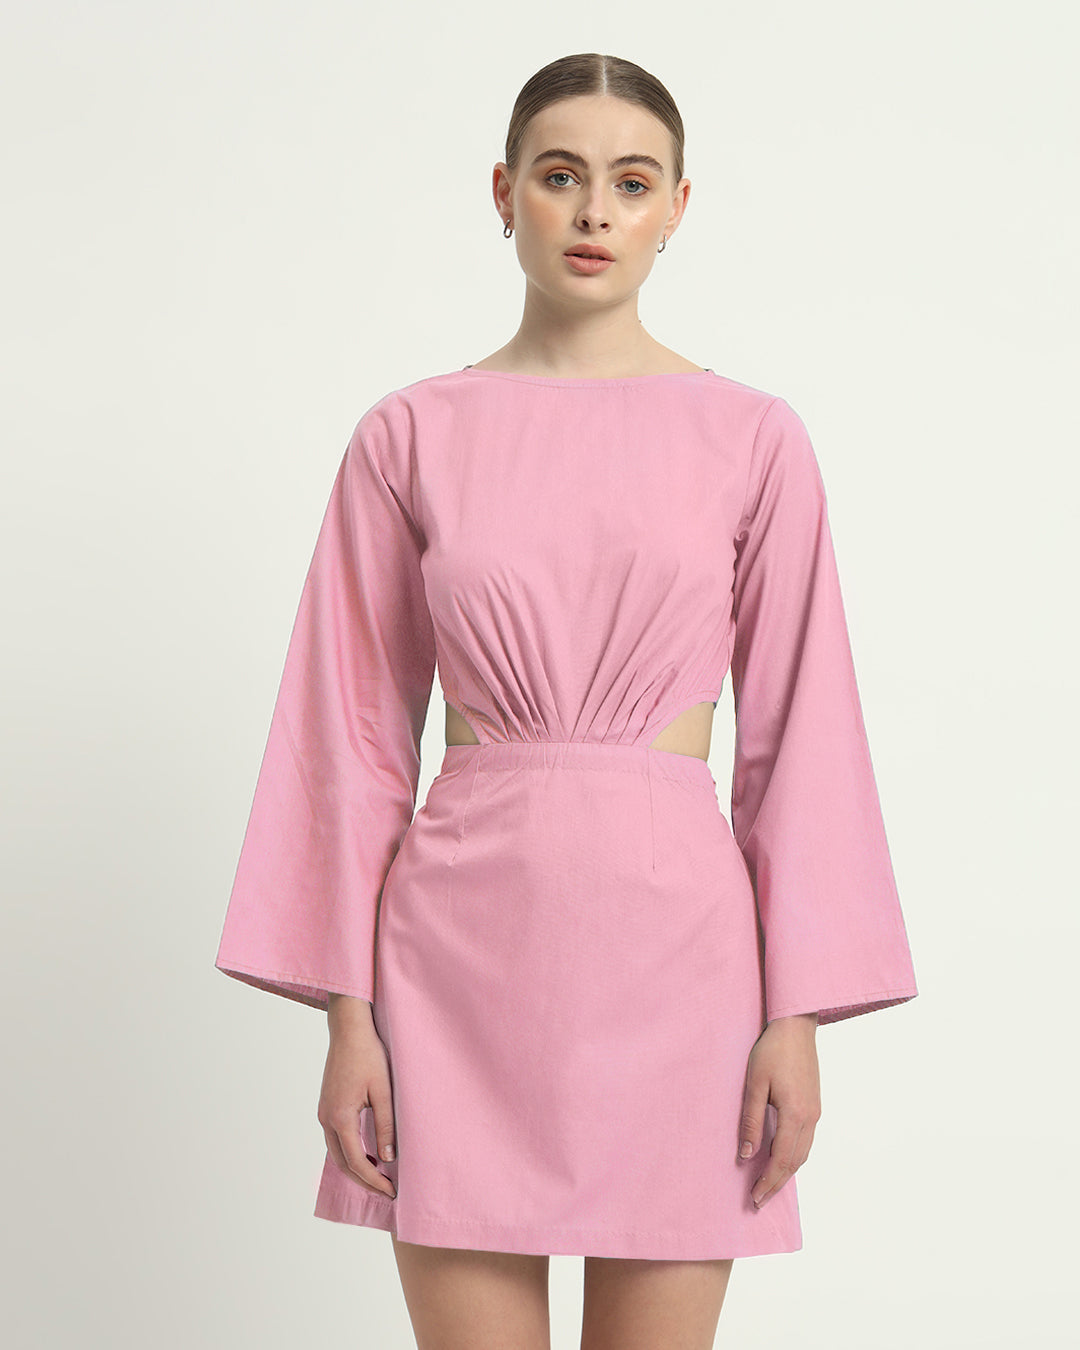 The Eloy Fondant Pink Cotton Dress